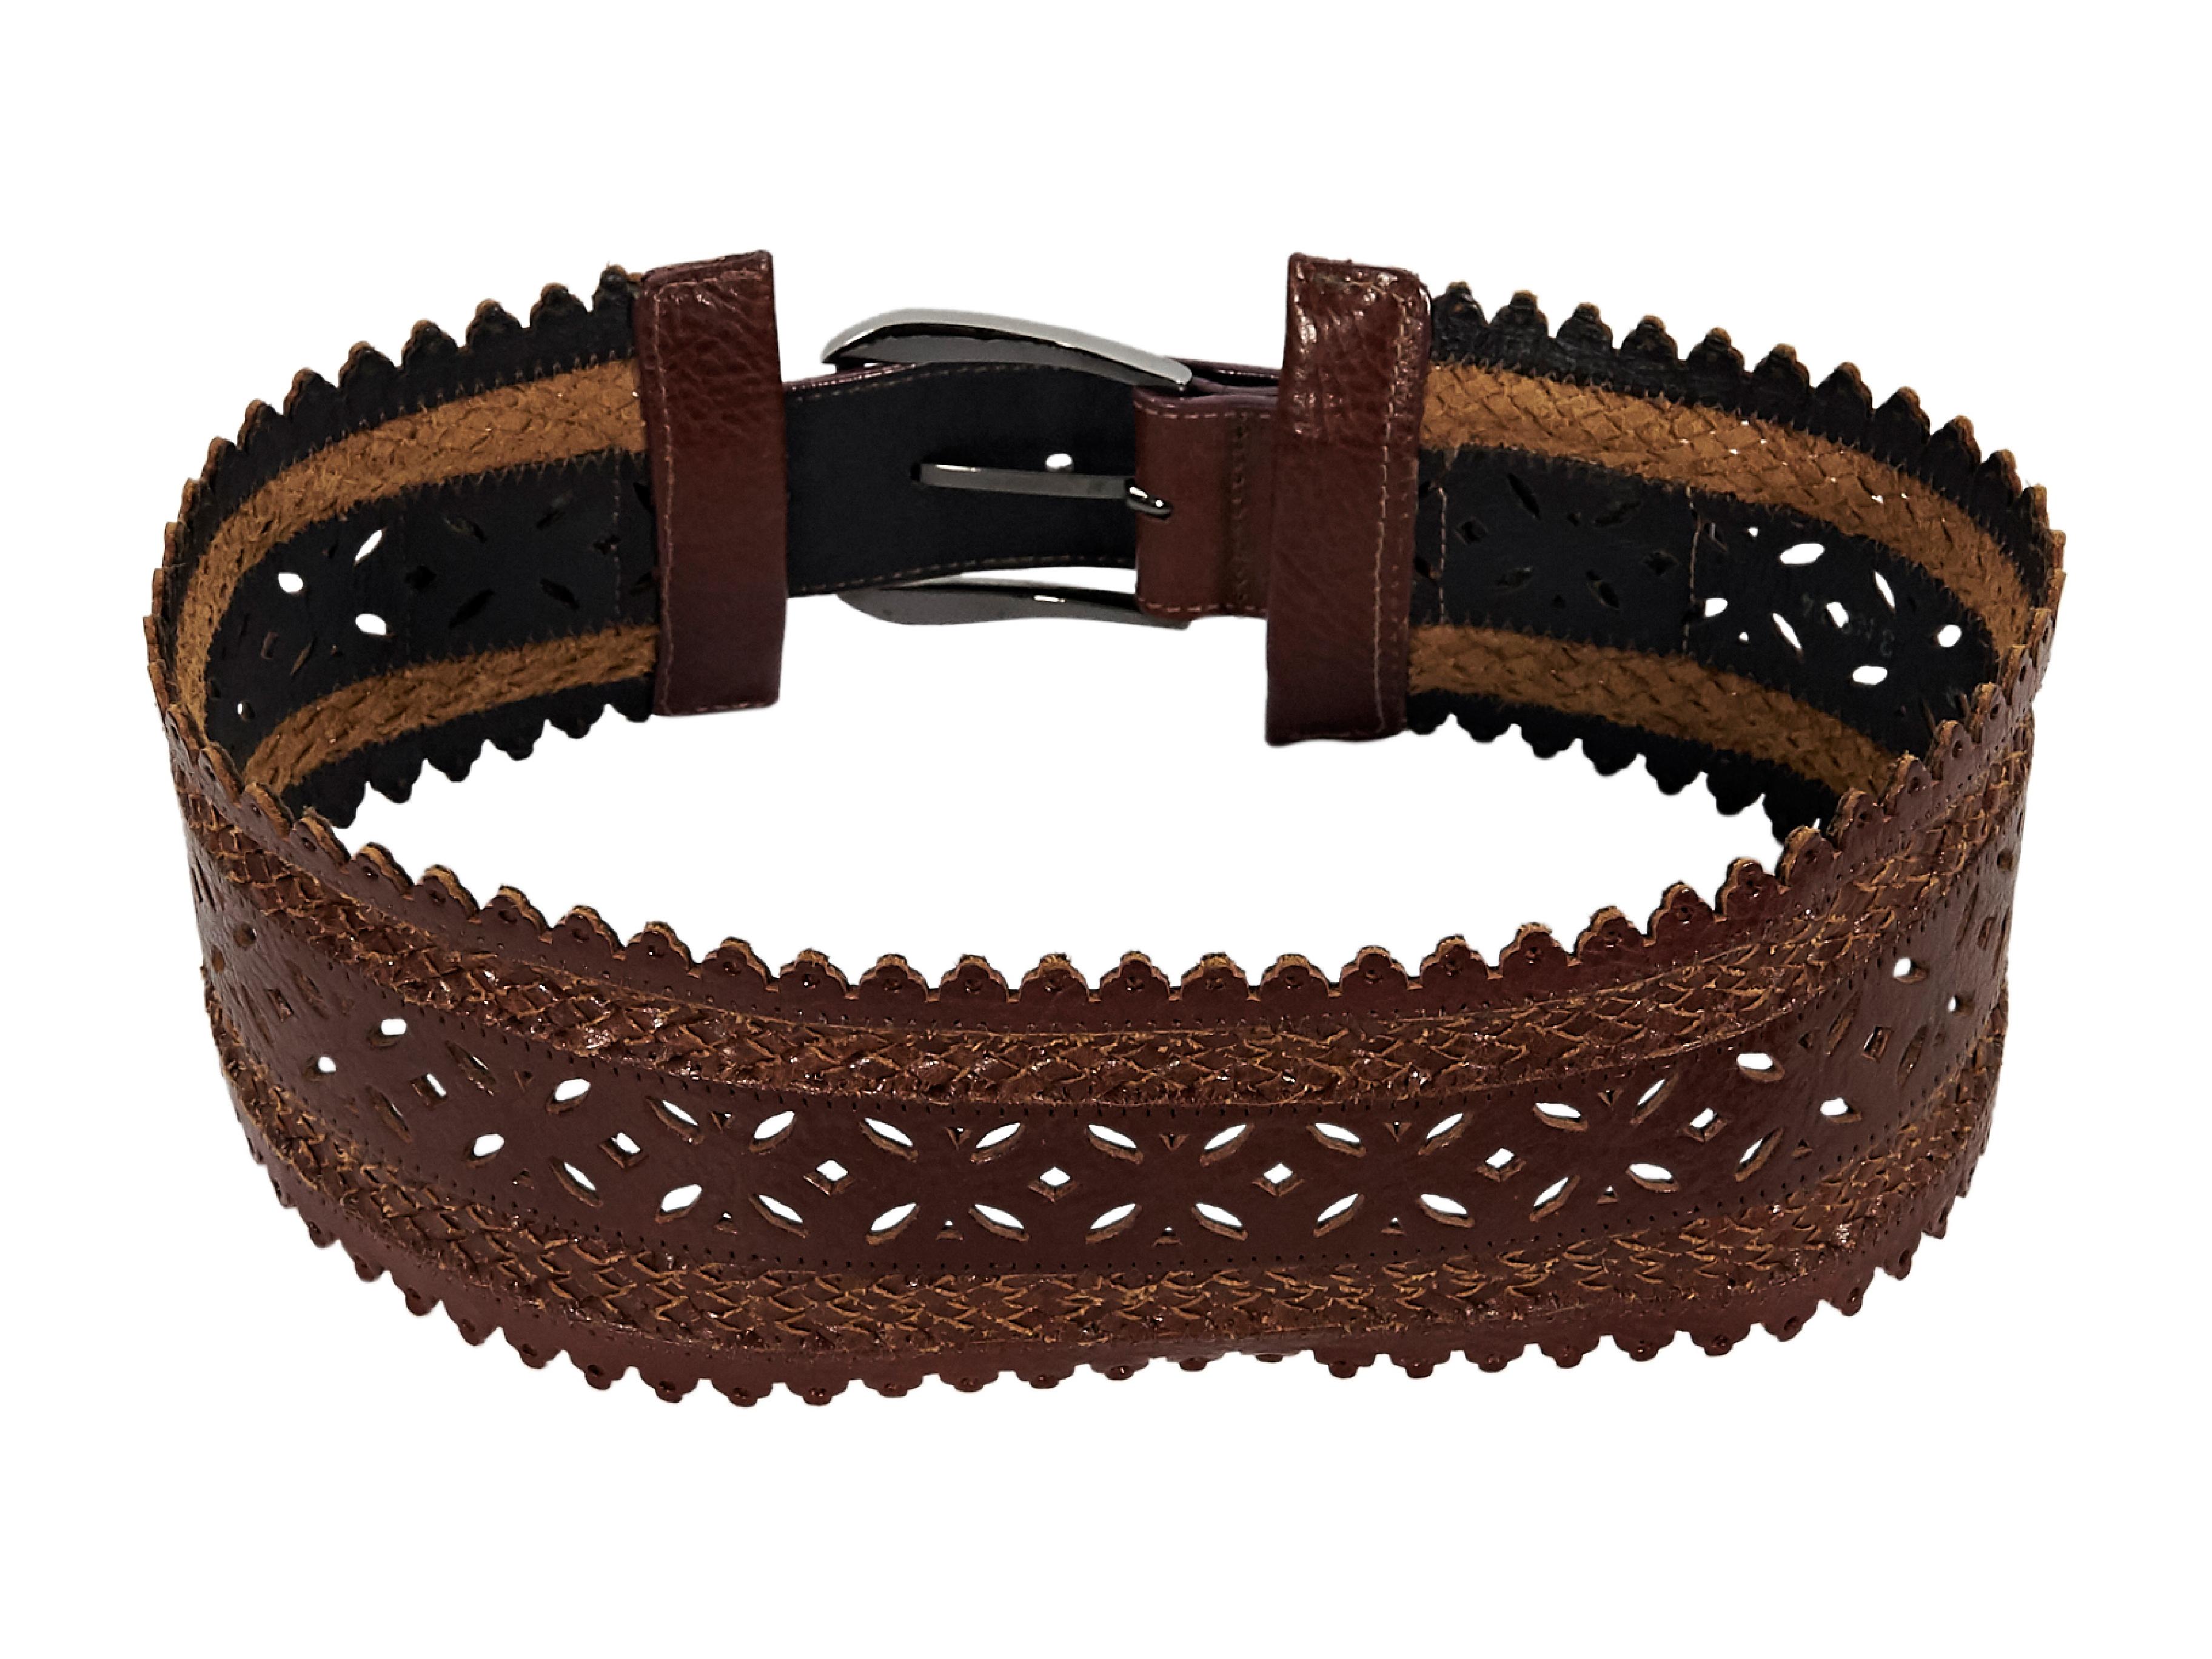 Product details:  Brown wide leather waist belt by Oscar de la Renta.  Features a laser-cut design.  Adjustable buckle closure.  Antiqued silvertone hardware.  26.5